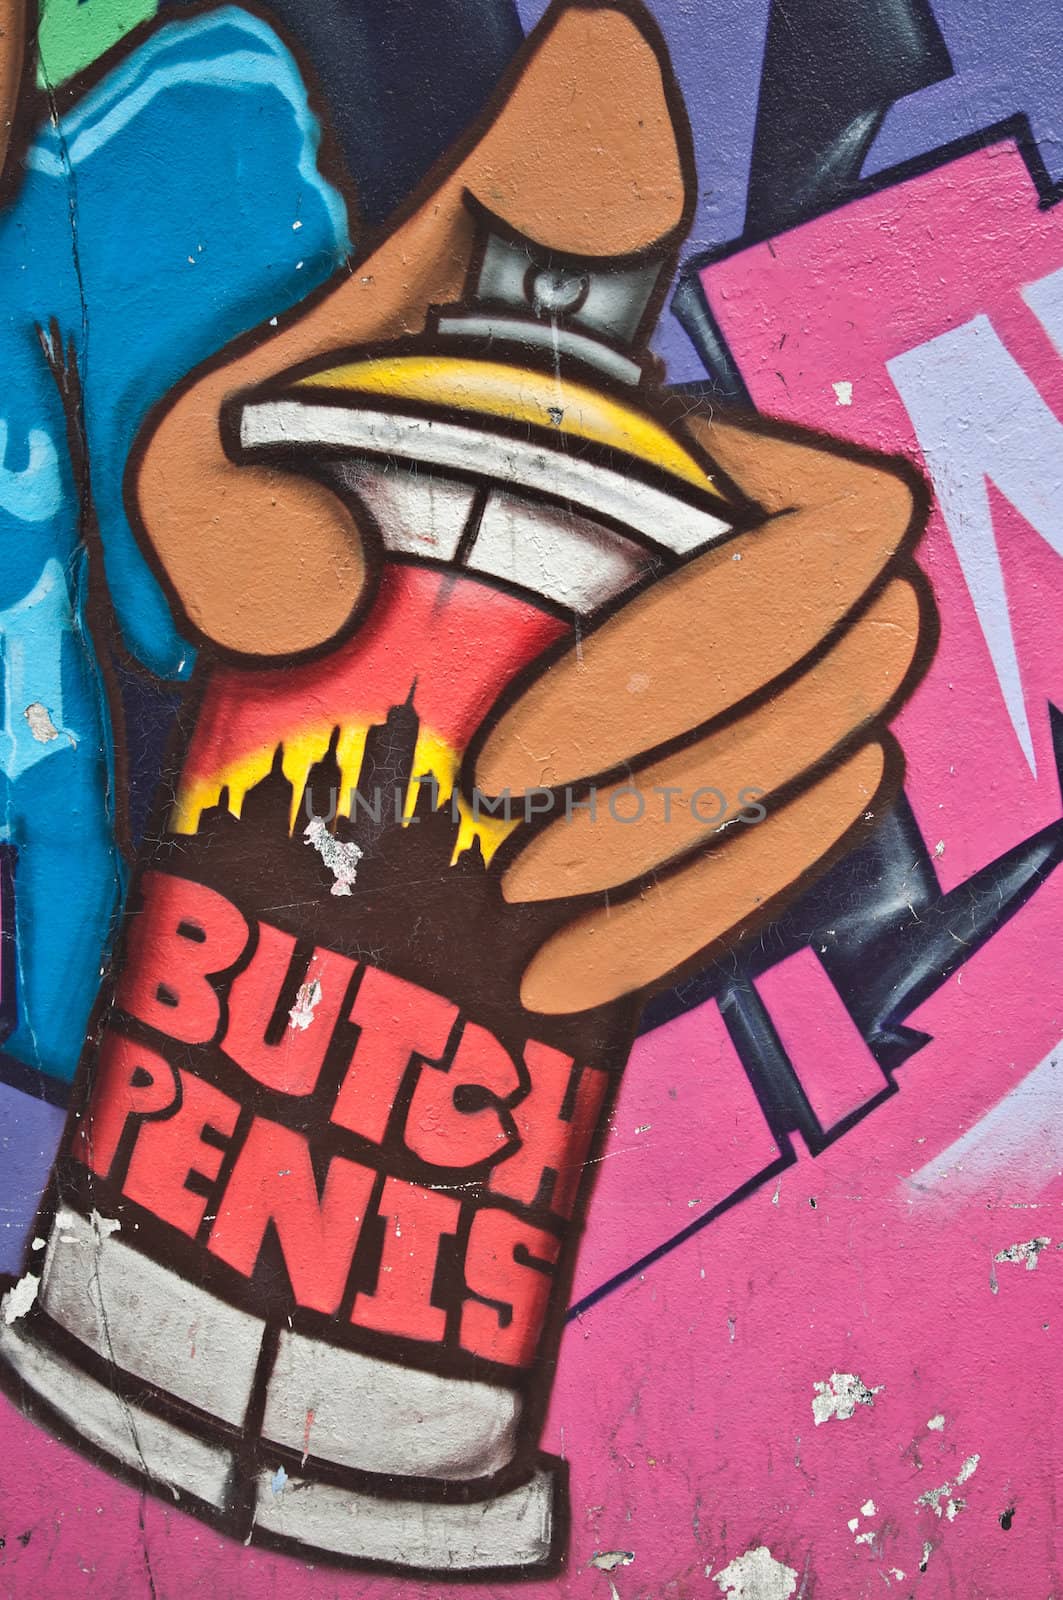 urban Art street in paris - hand with paint bomb